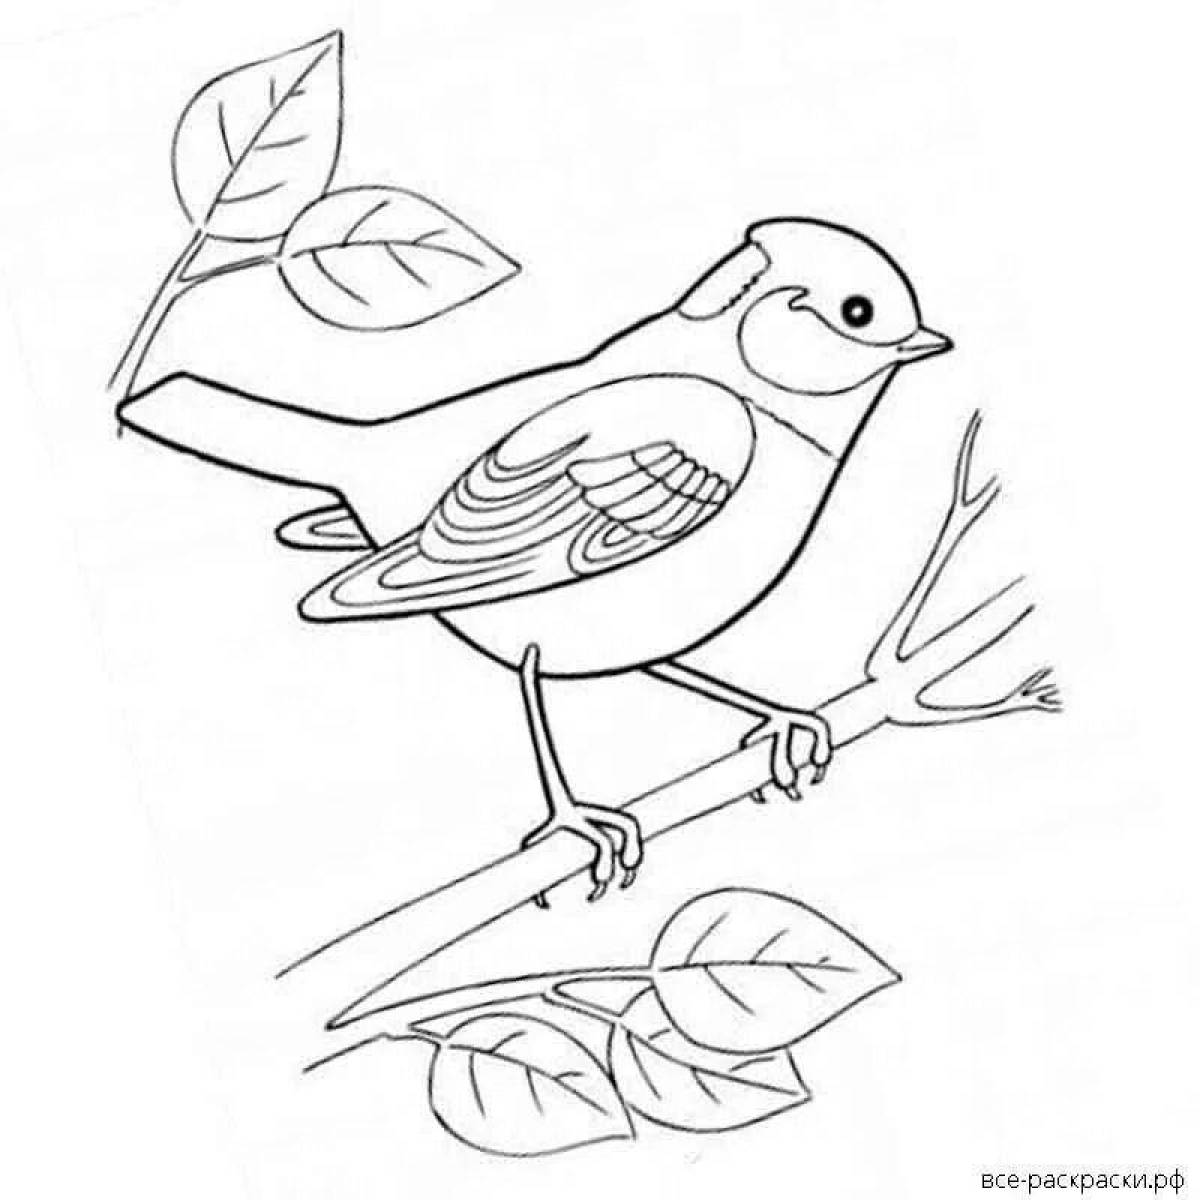 Joyful bird on a branch